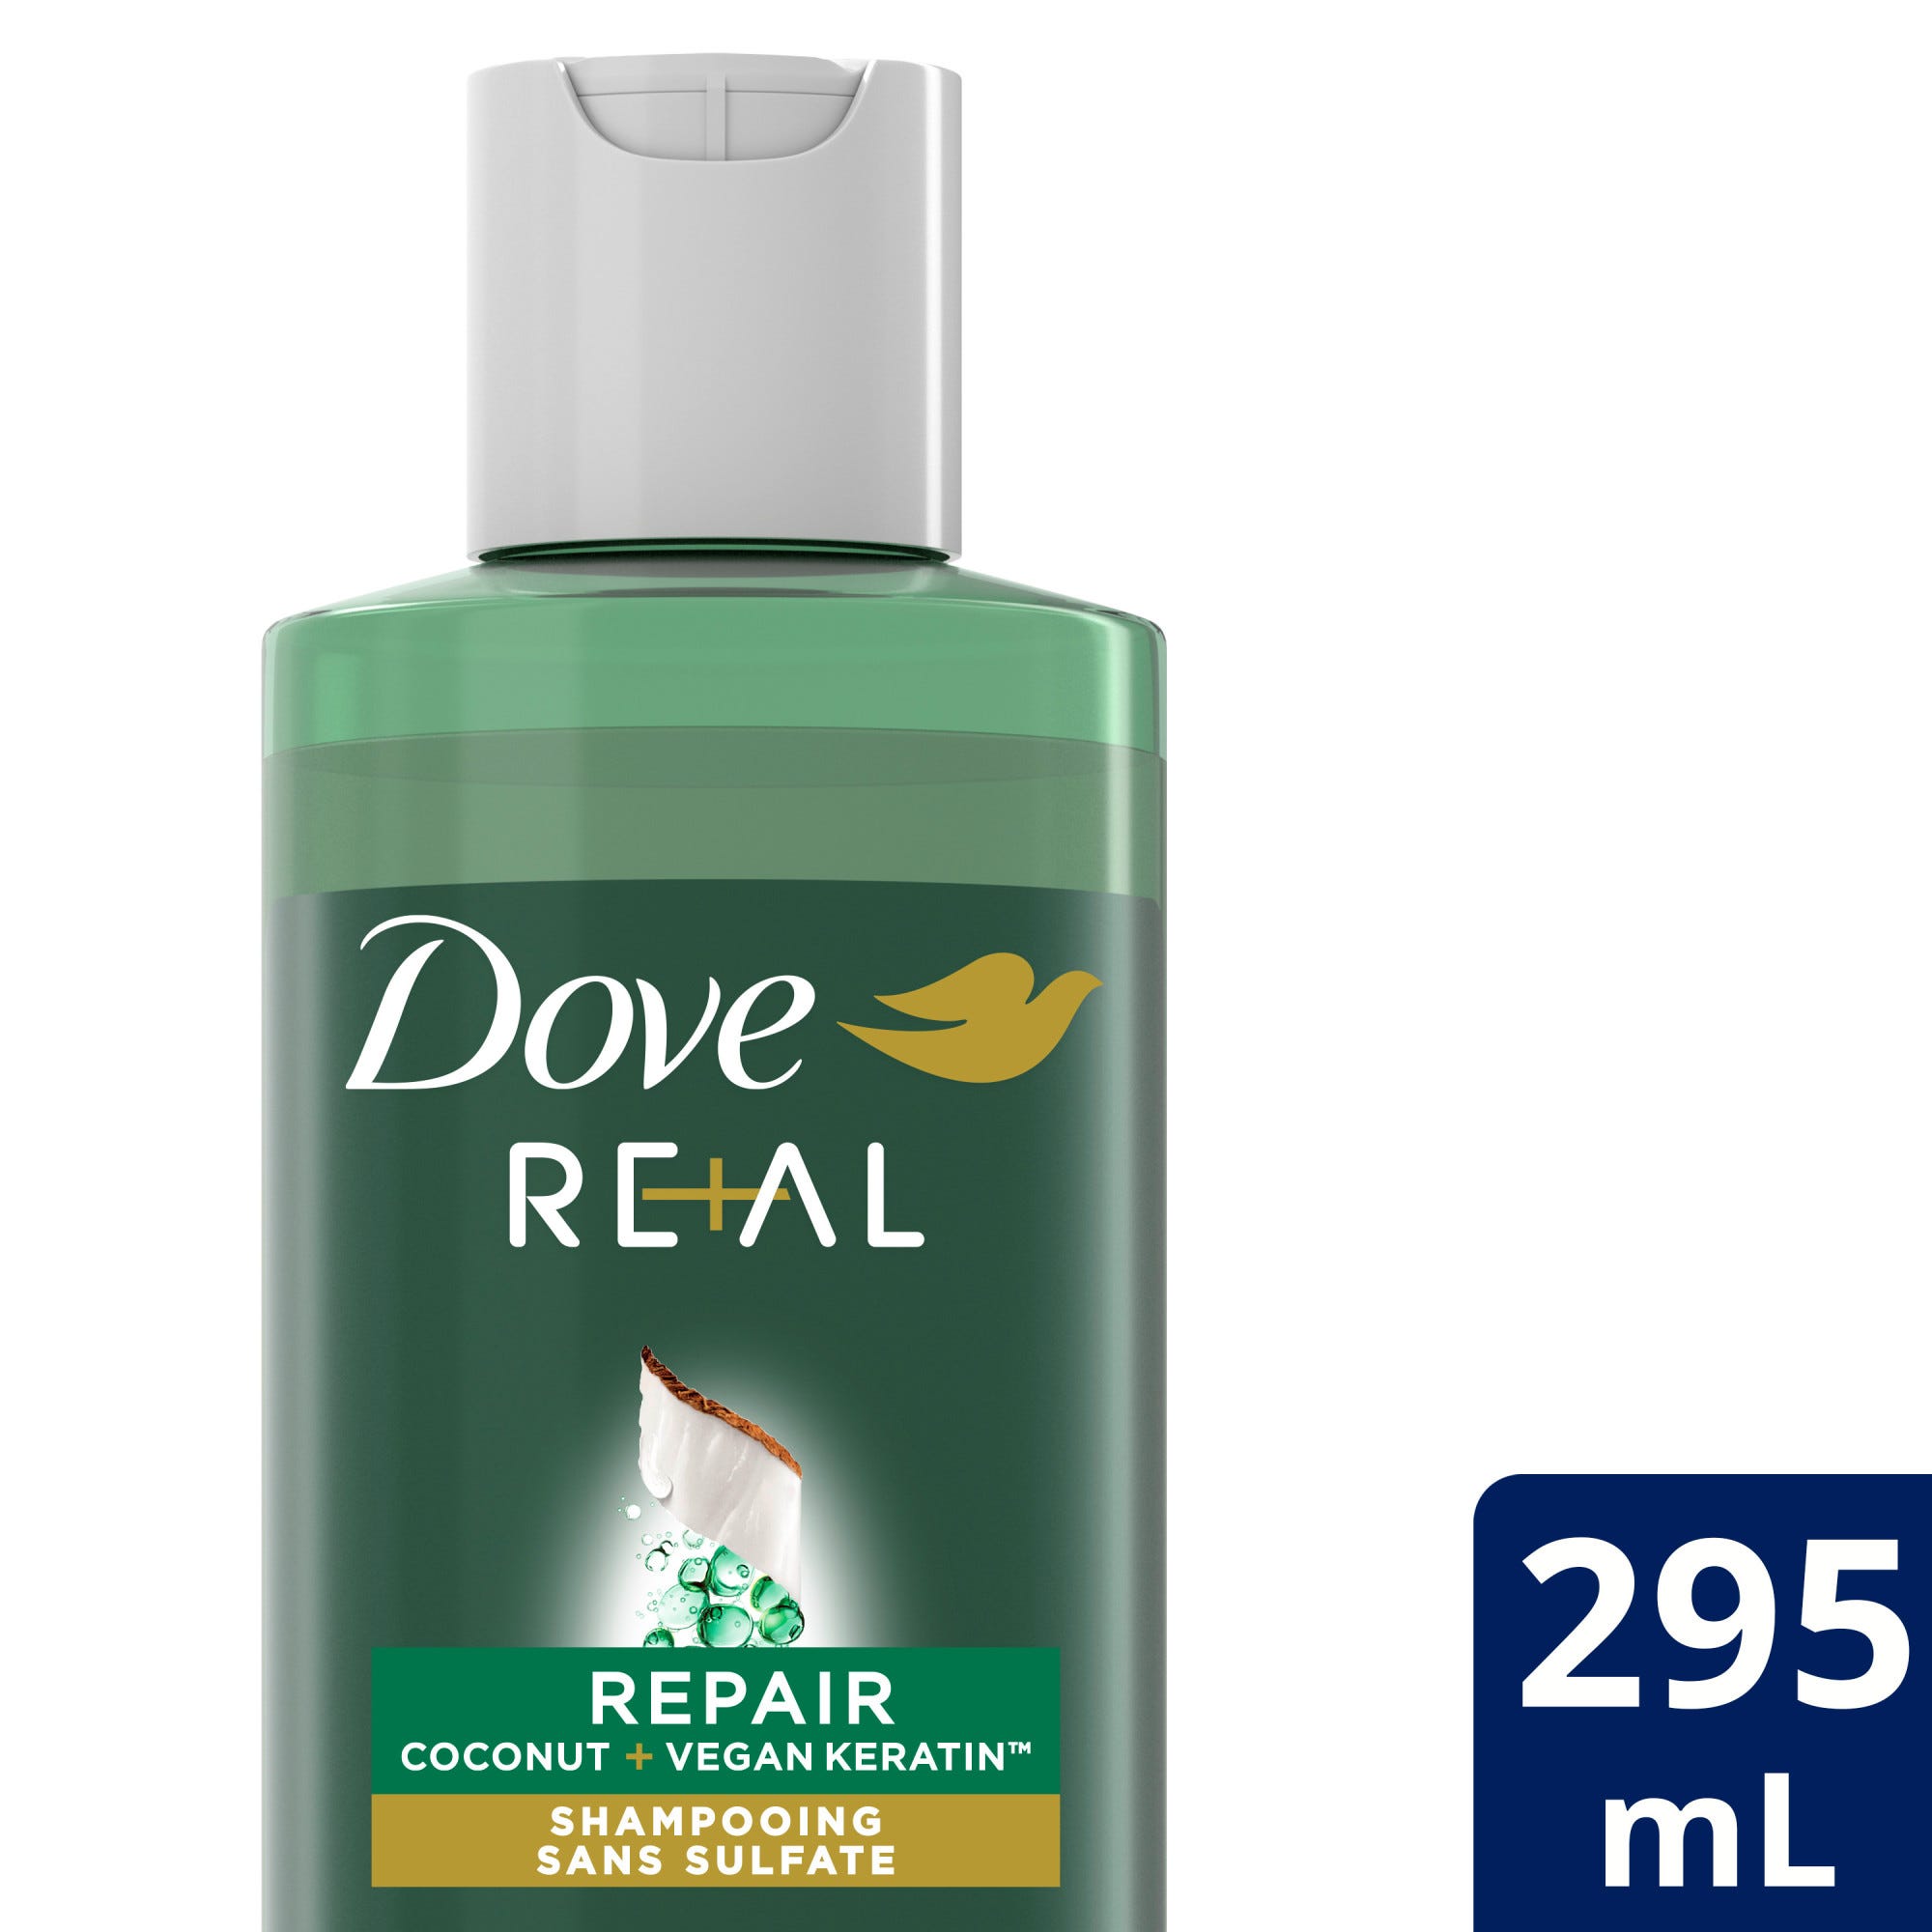 Dove RE+AL Bio-Mimetic Care Shampoo Repair Coconut + Vegan Keratin - 10fl oz